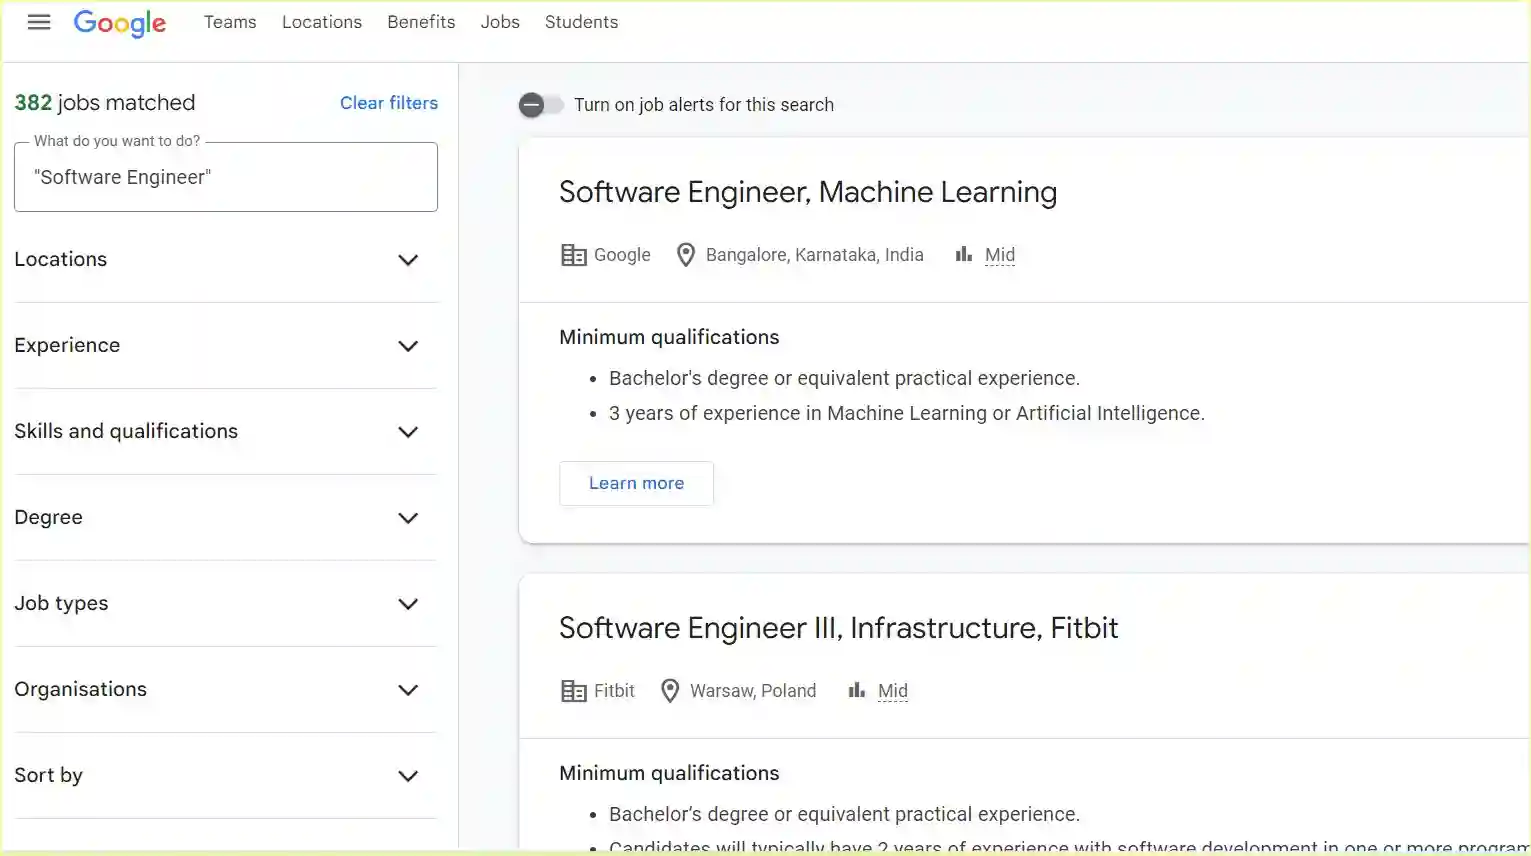 Google Career Website Software Engineer Jobs